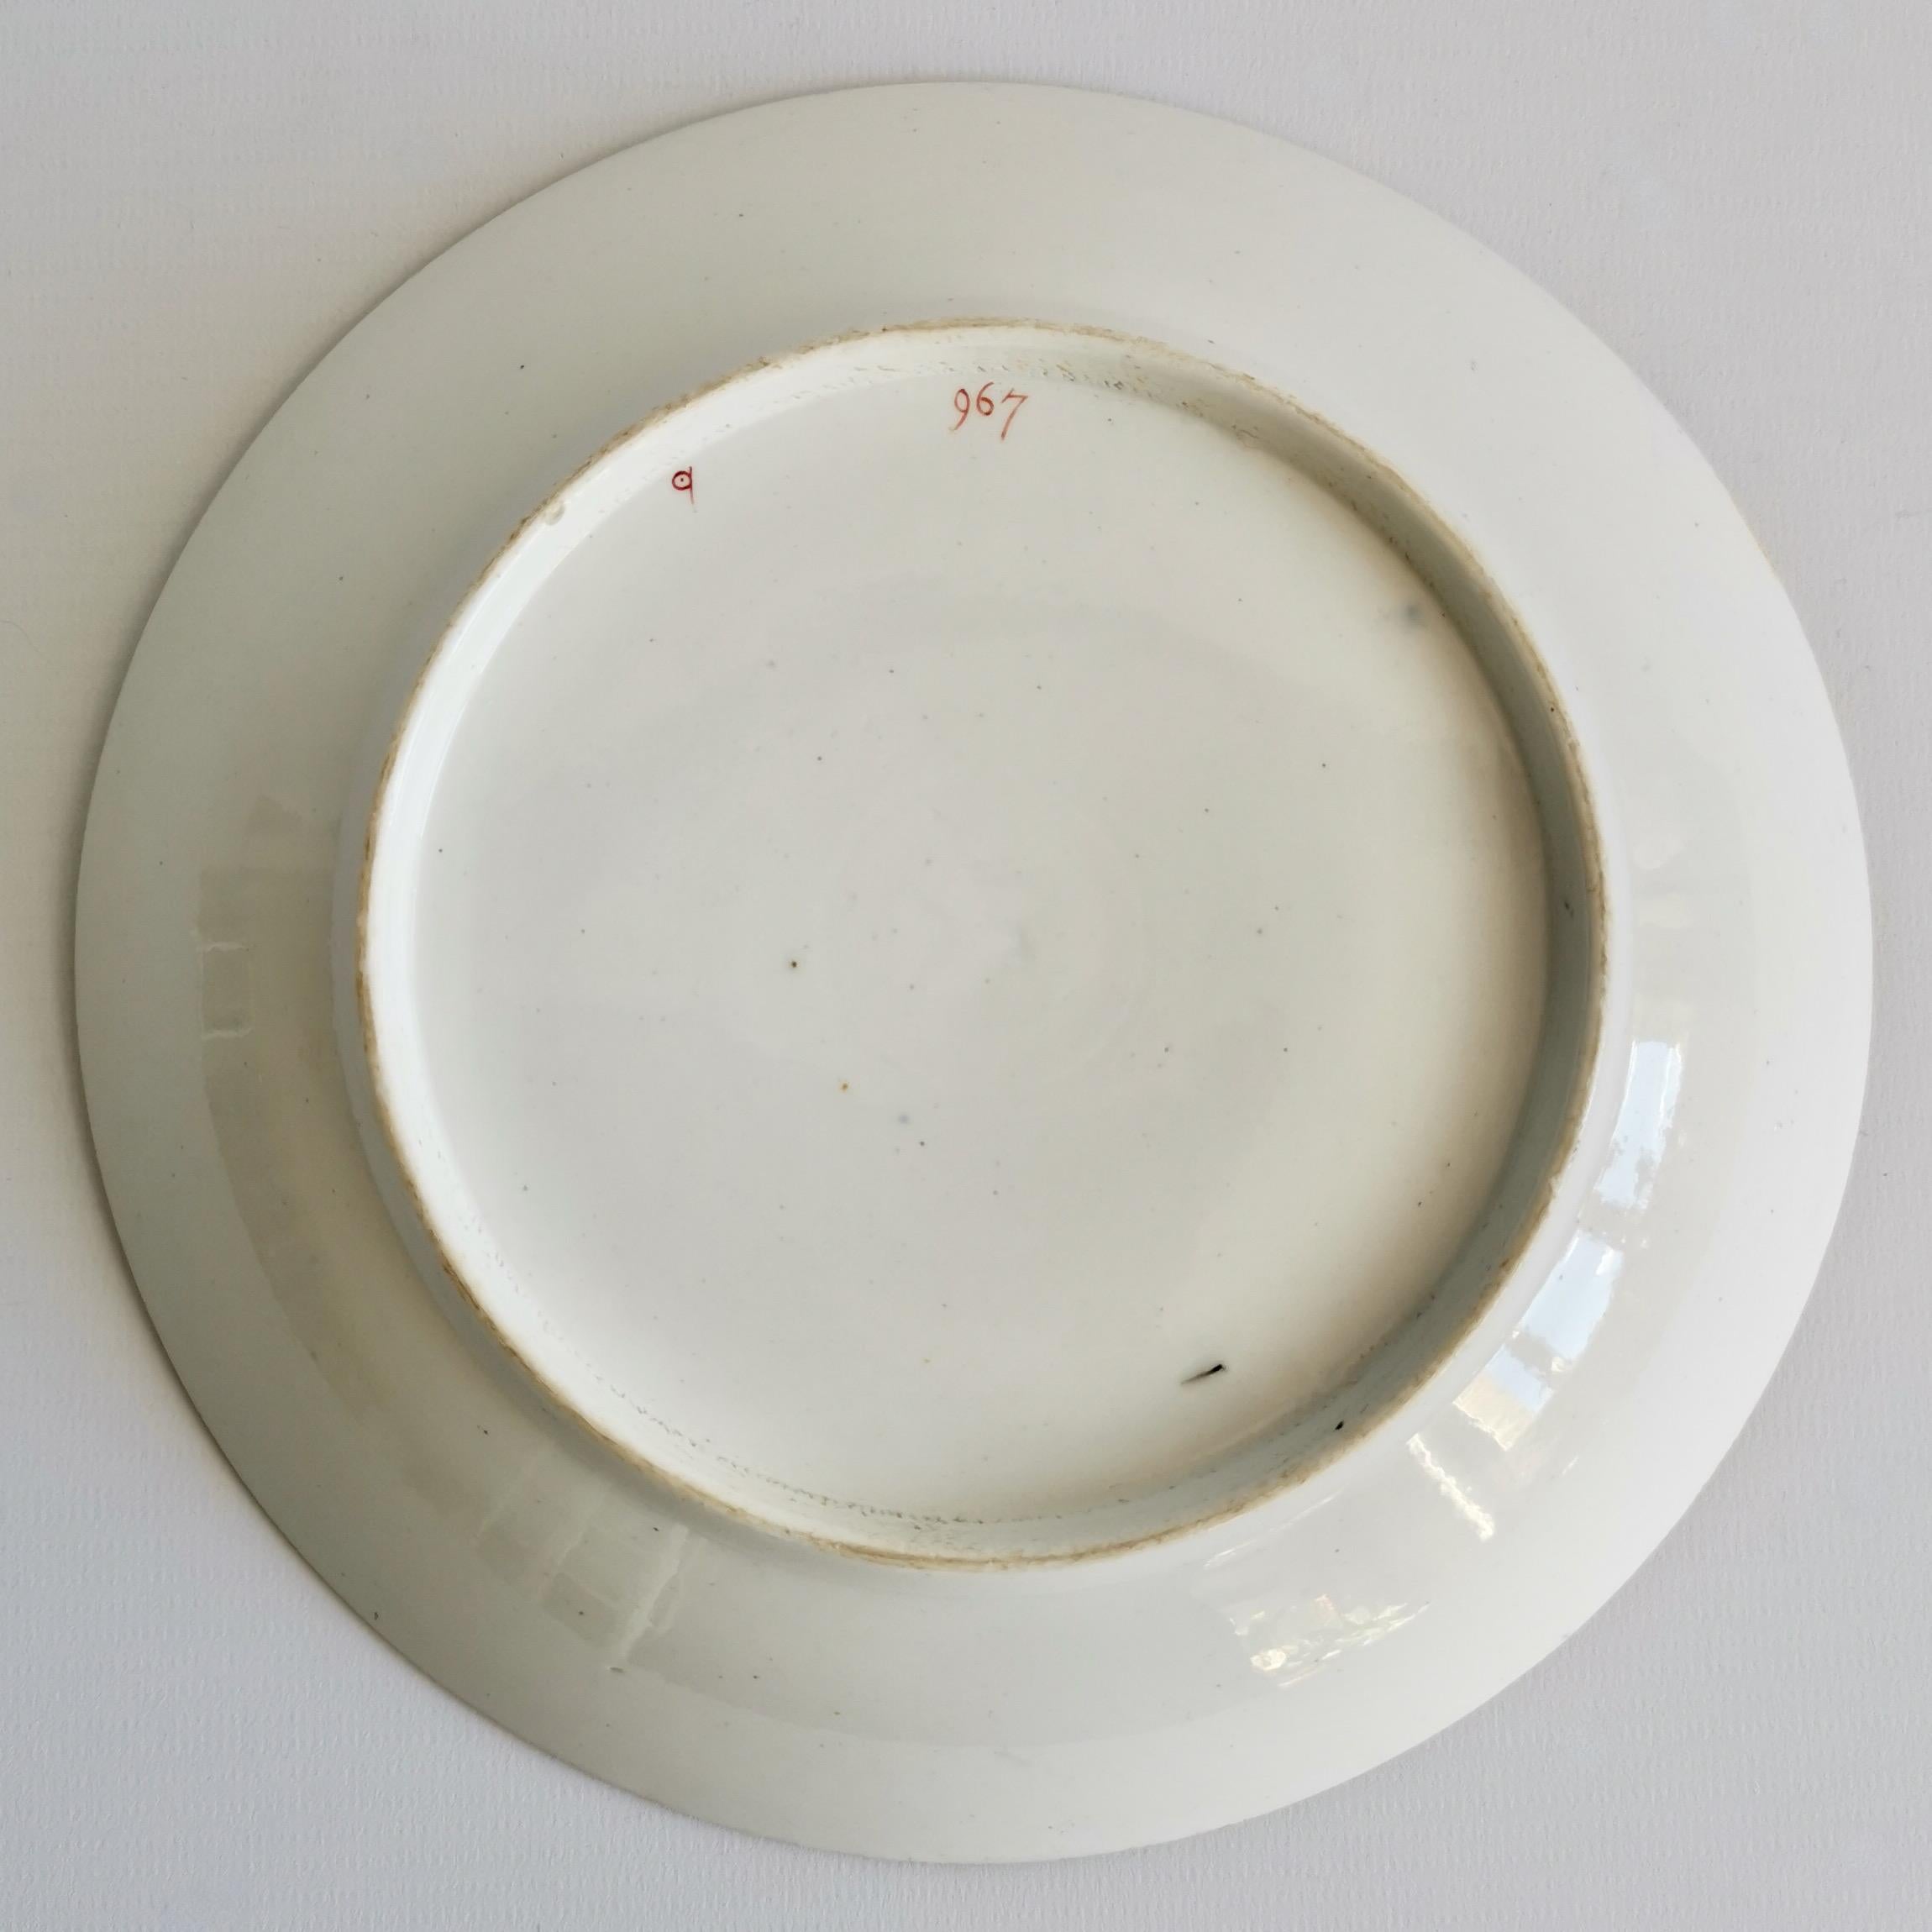 Spode Saucer Dish Plate, Imari Tobacco Leaf Patt. 967, ca 1815 5